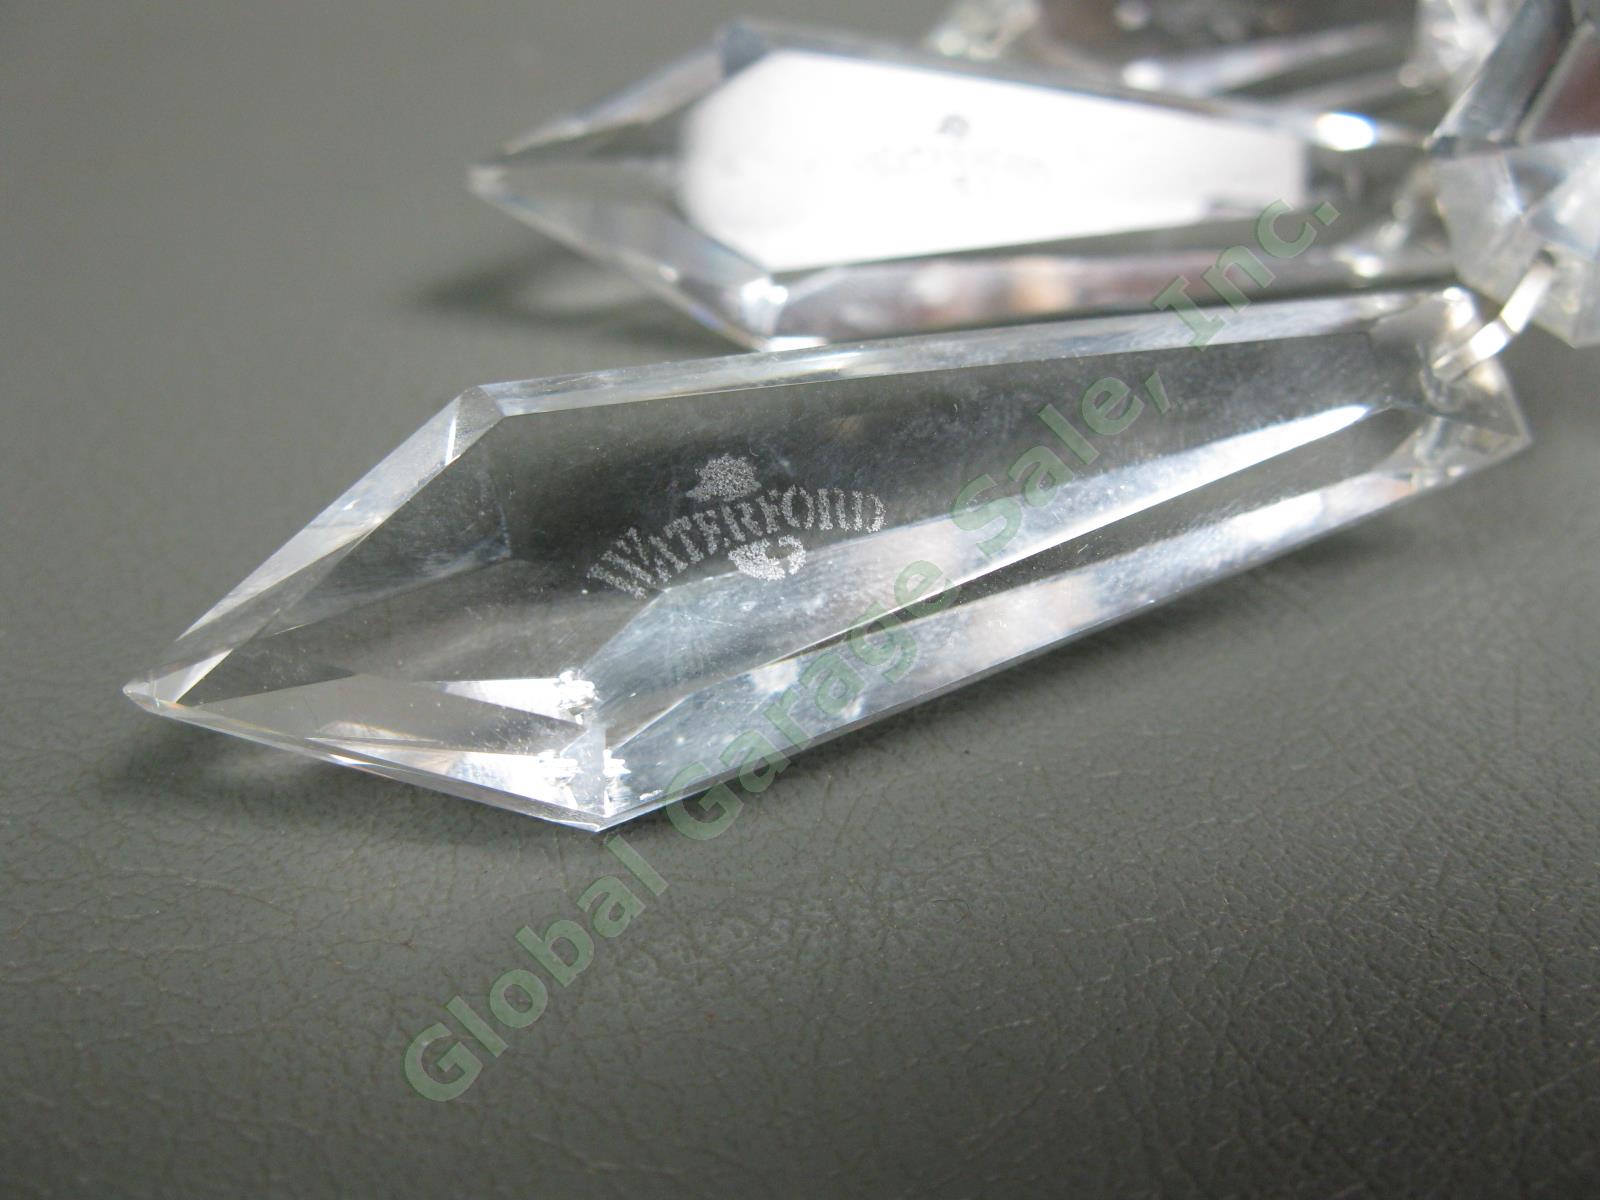 Waterford Crystal Tara 10" Candelabra Diamond Wedge Drops Candlestick Holder NR 3